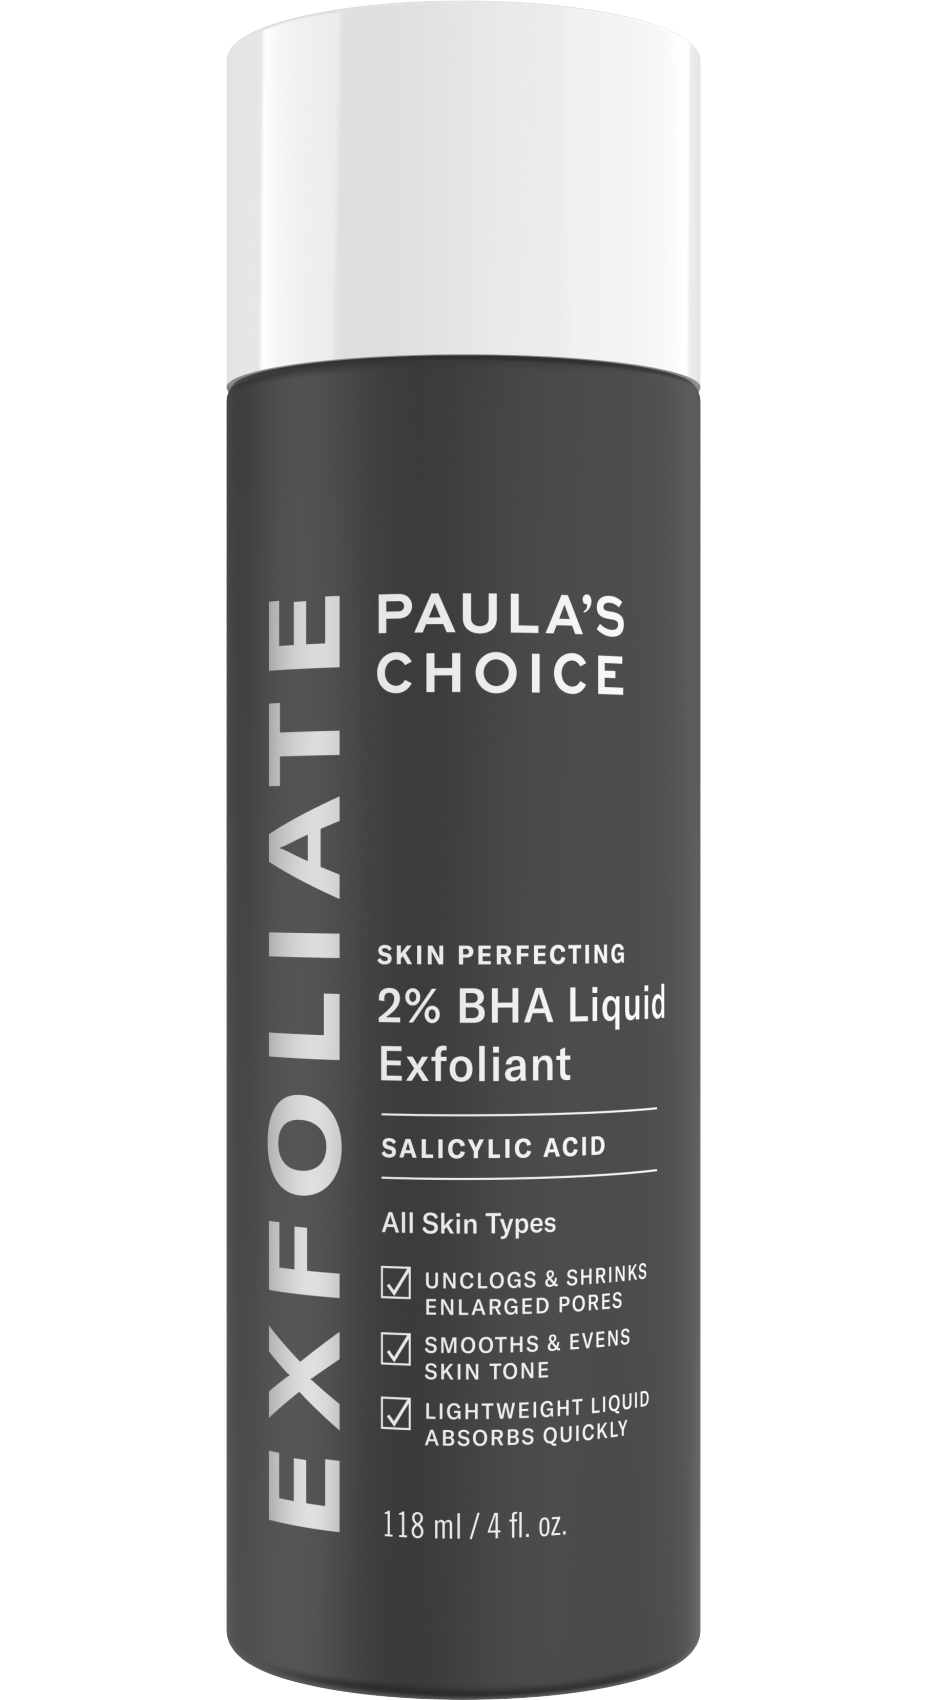 Skin Perfecting 2% BHA Liquid Exfoliant Paula's Choice Skin Perfecting 2% BHA Liquid Exfoliant 1